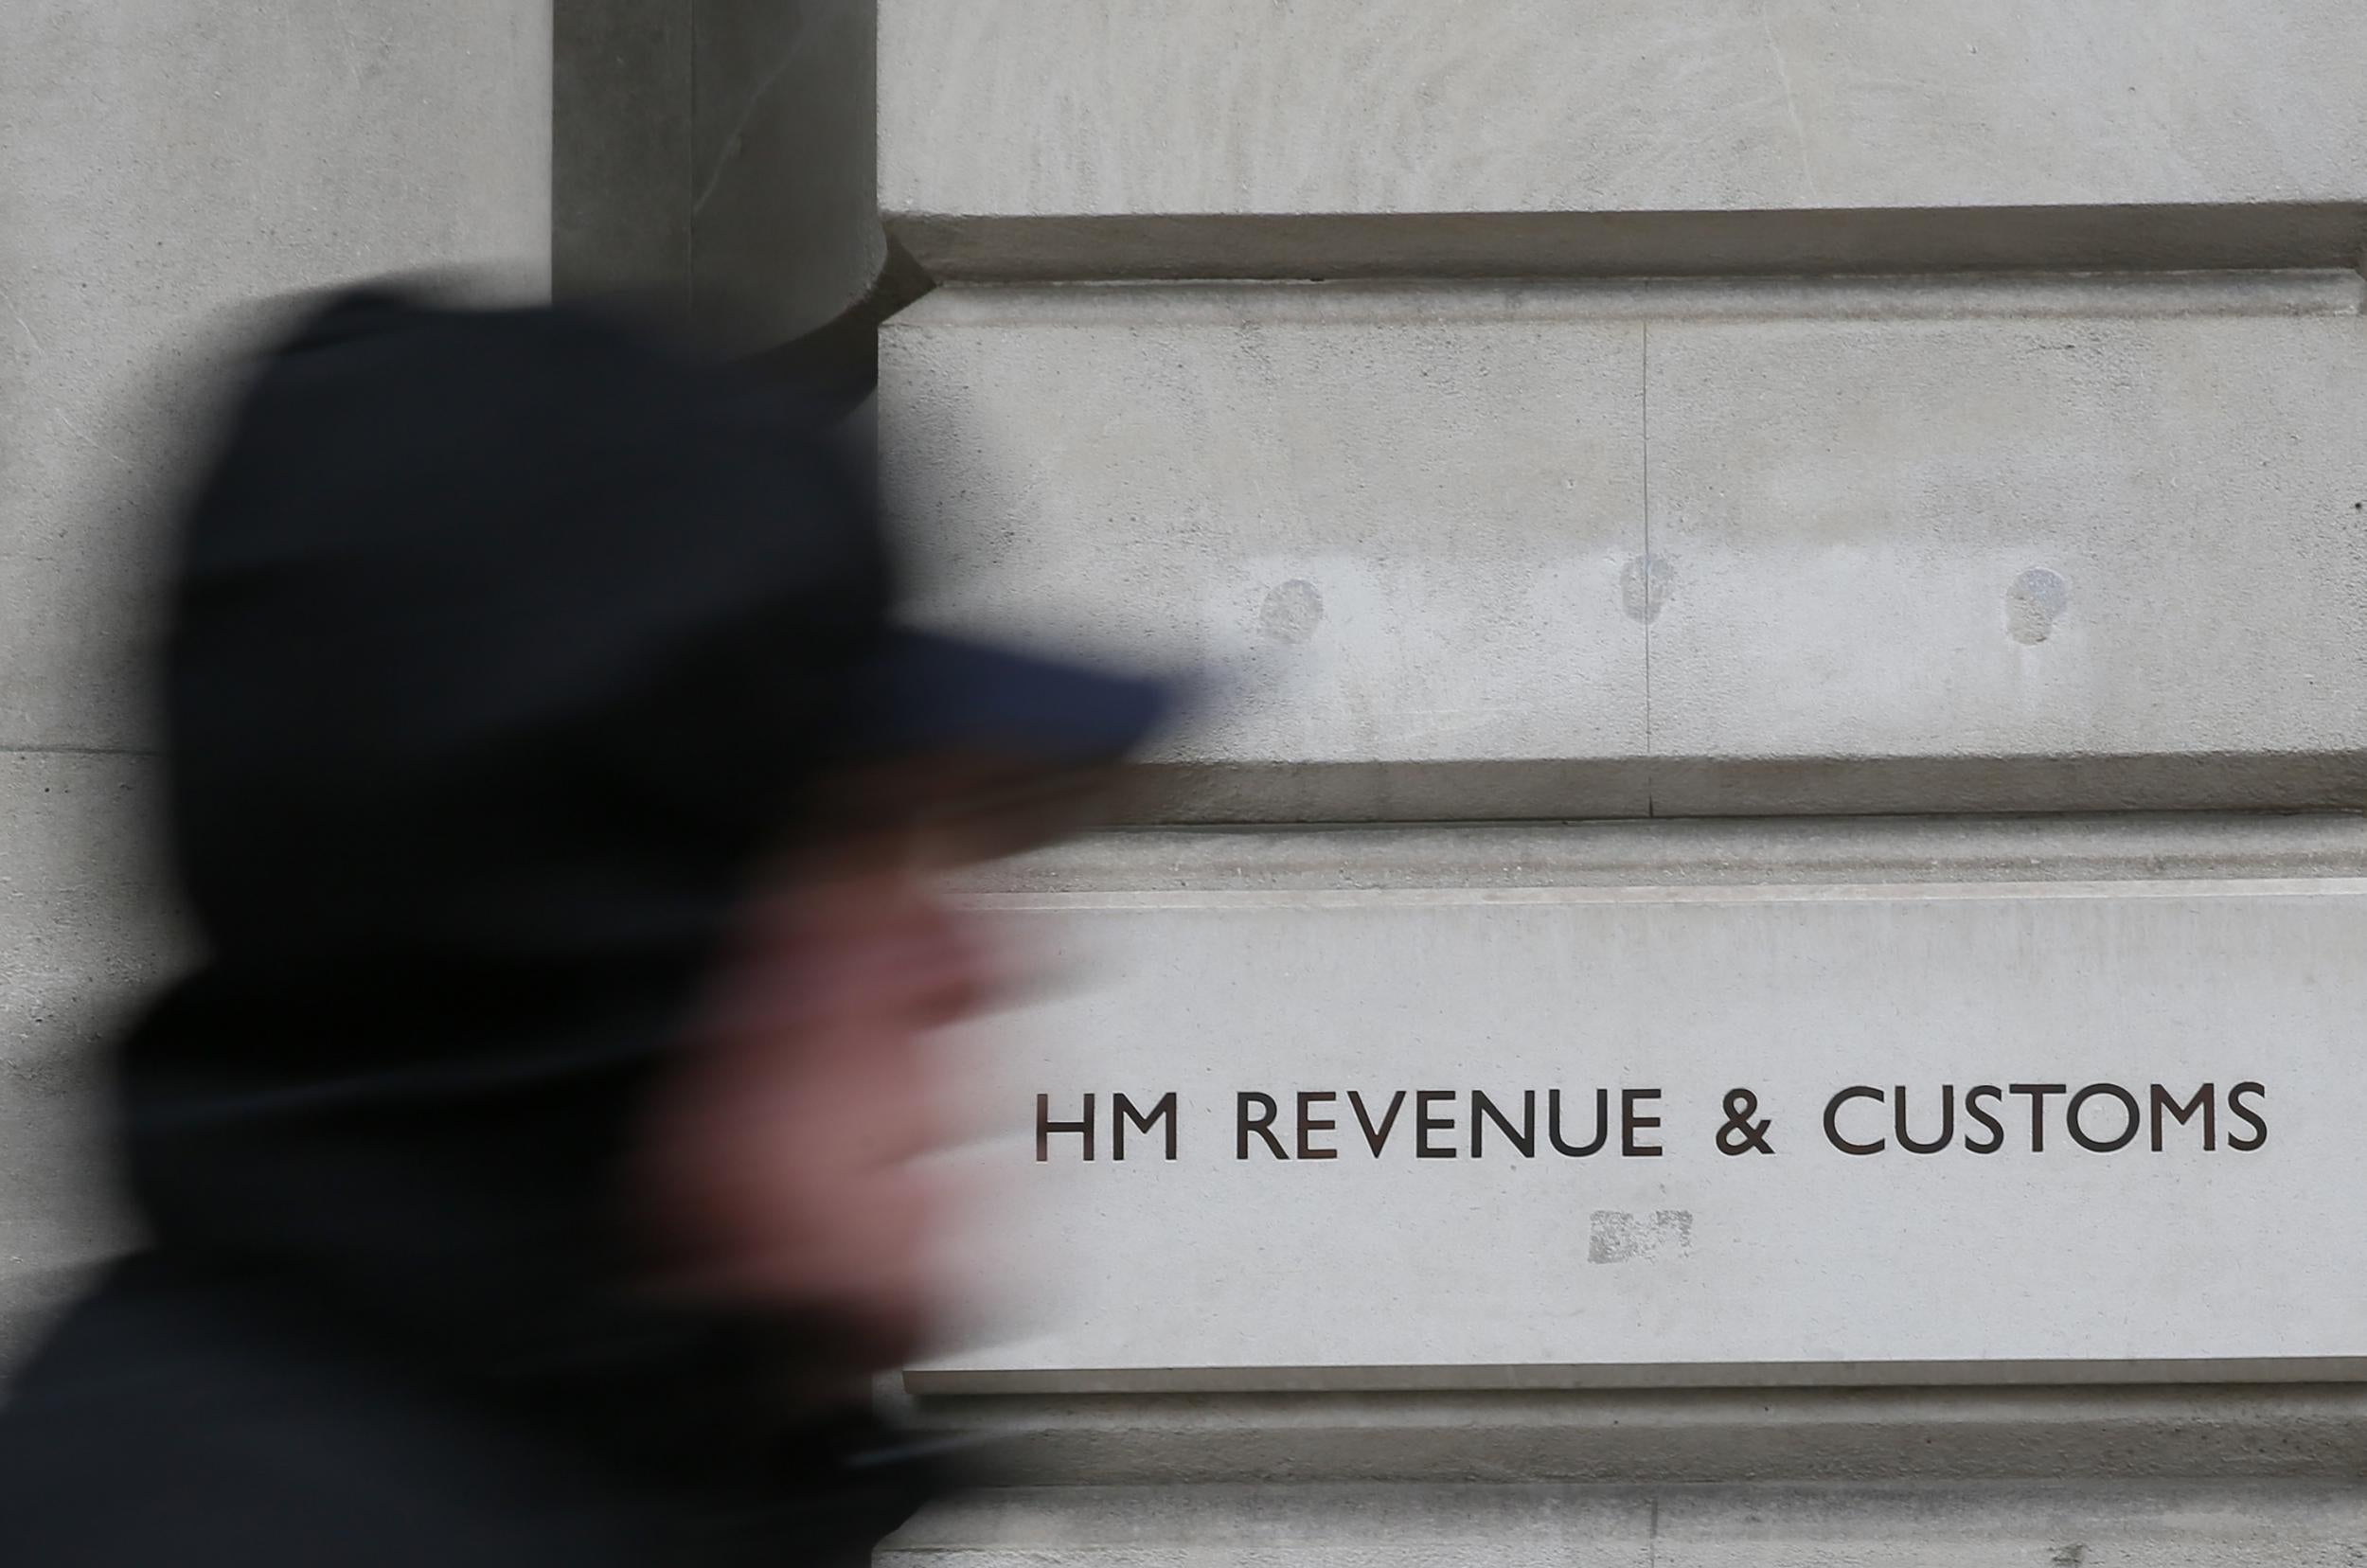 Under fire: HM Revenue & Customs